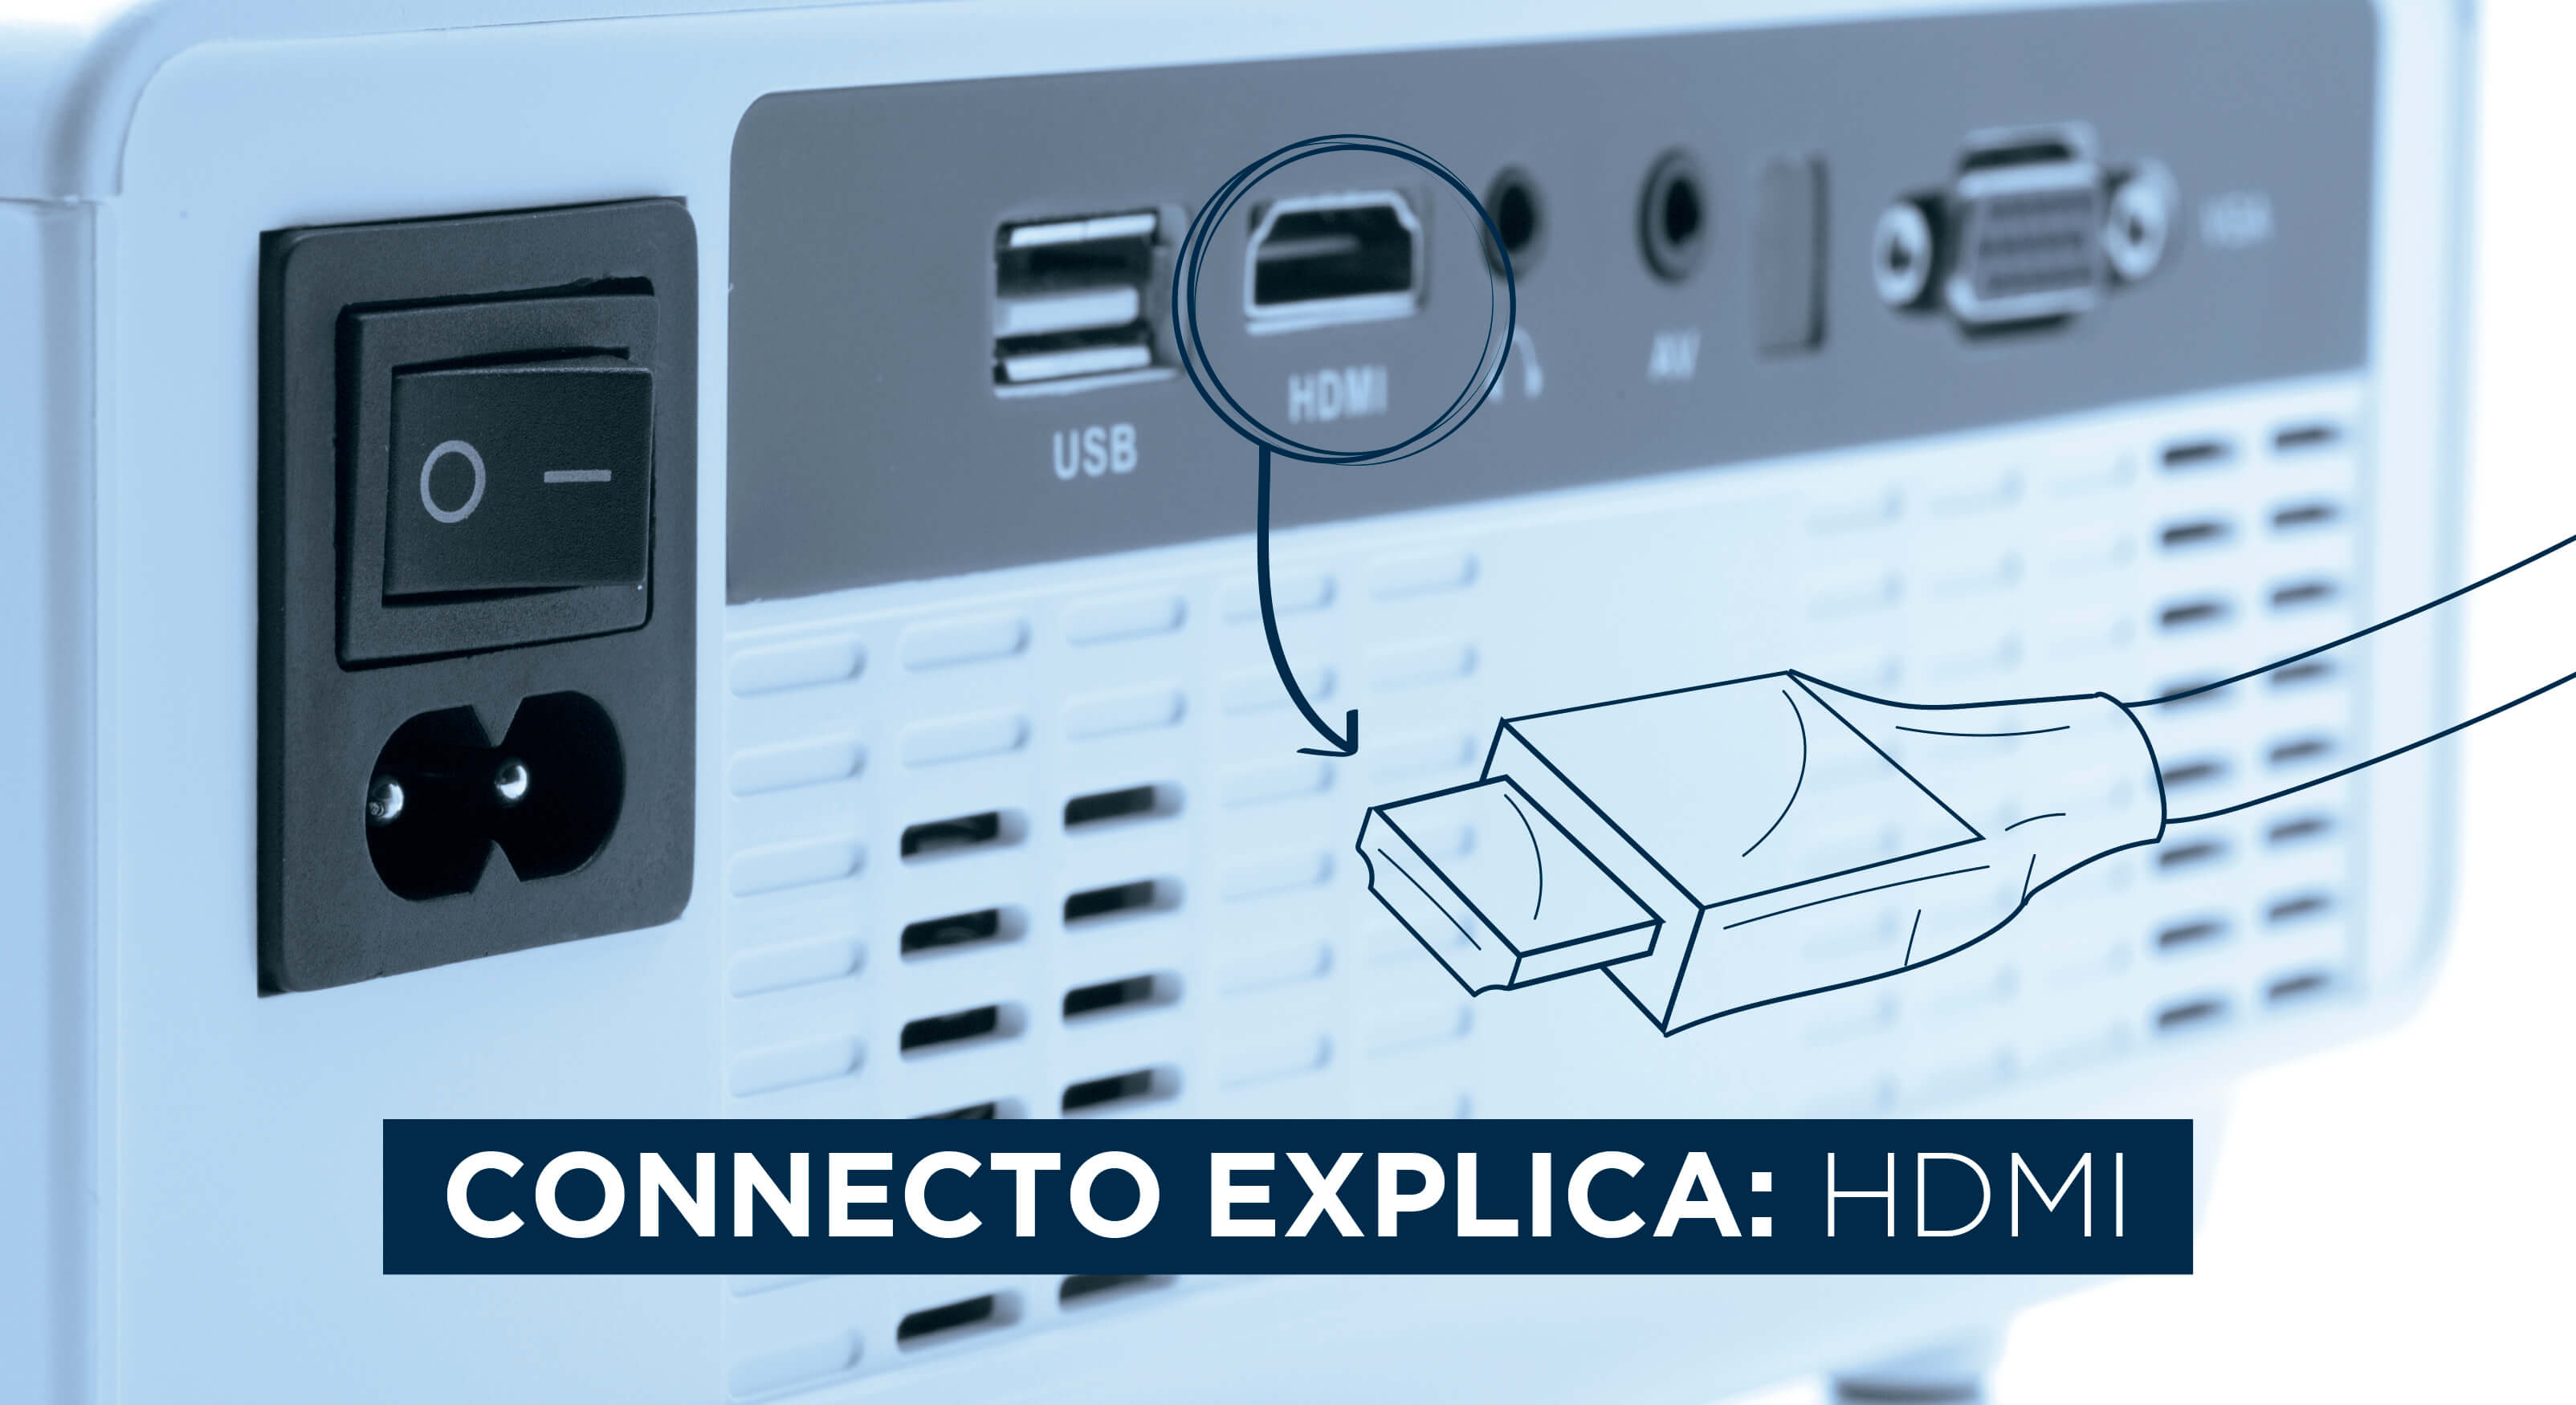 Connecto explica - HDMI: